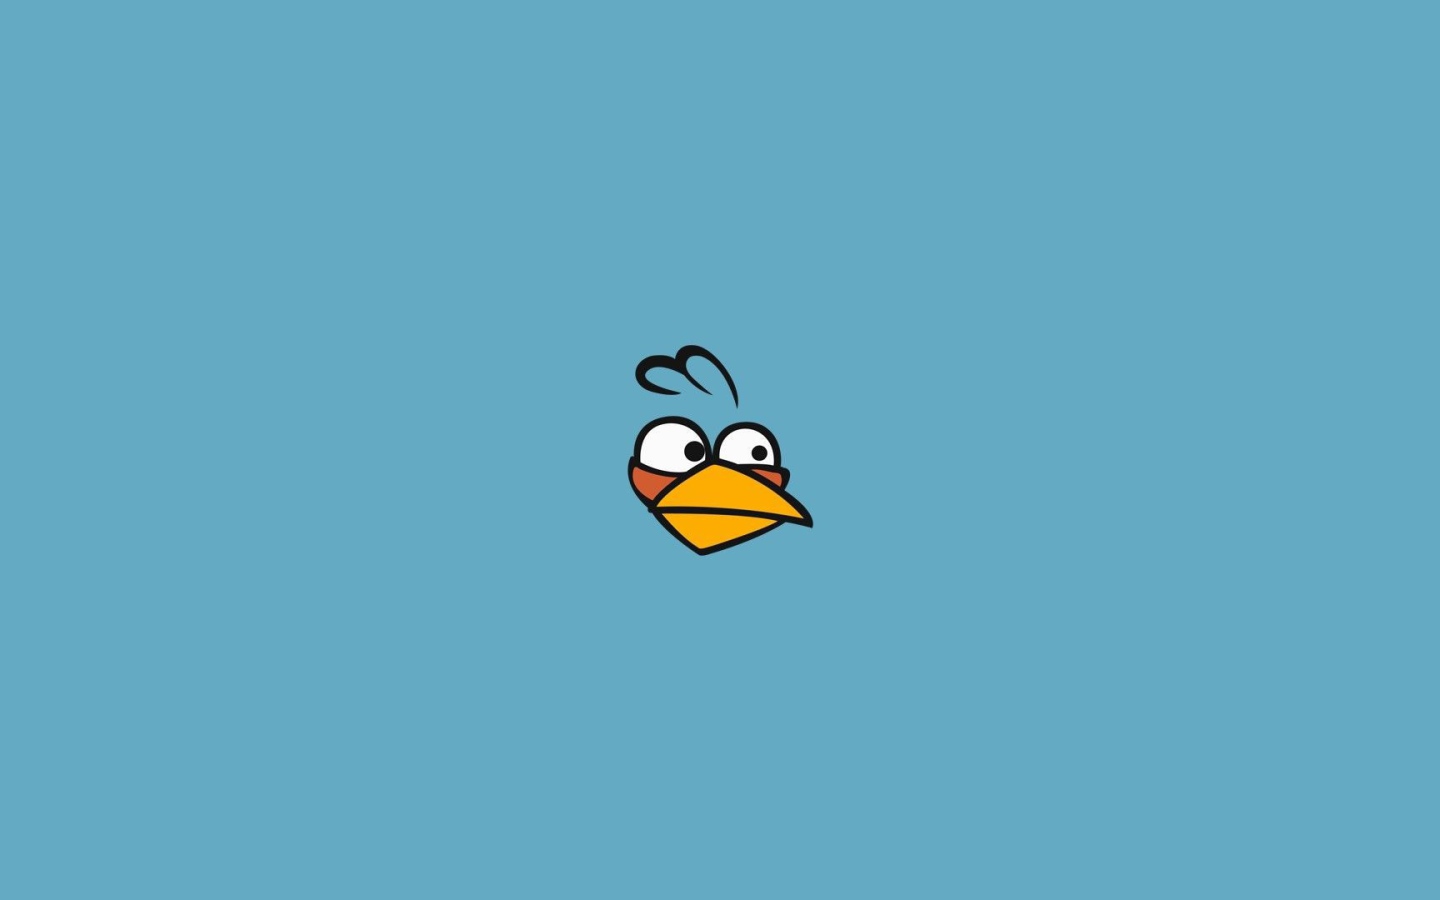 Птица Angry Birds, голубой фон